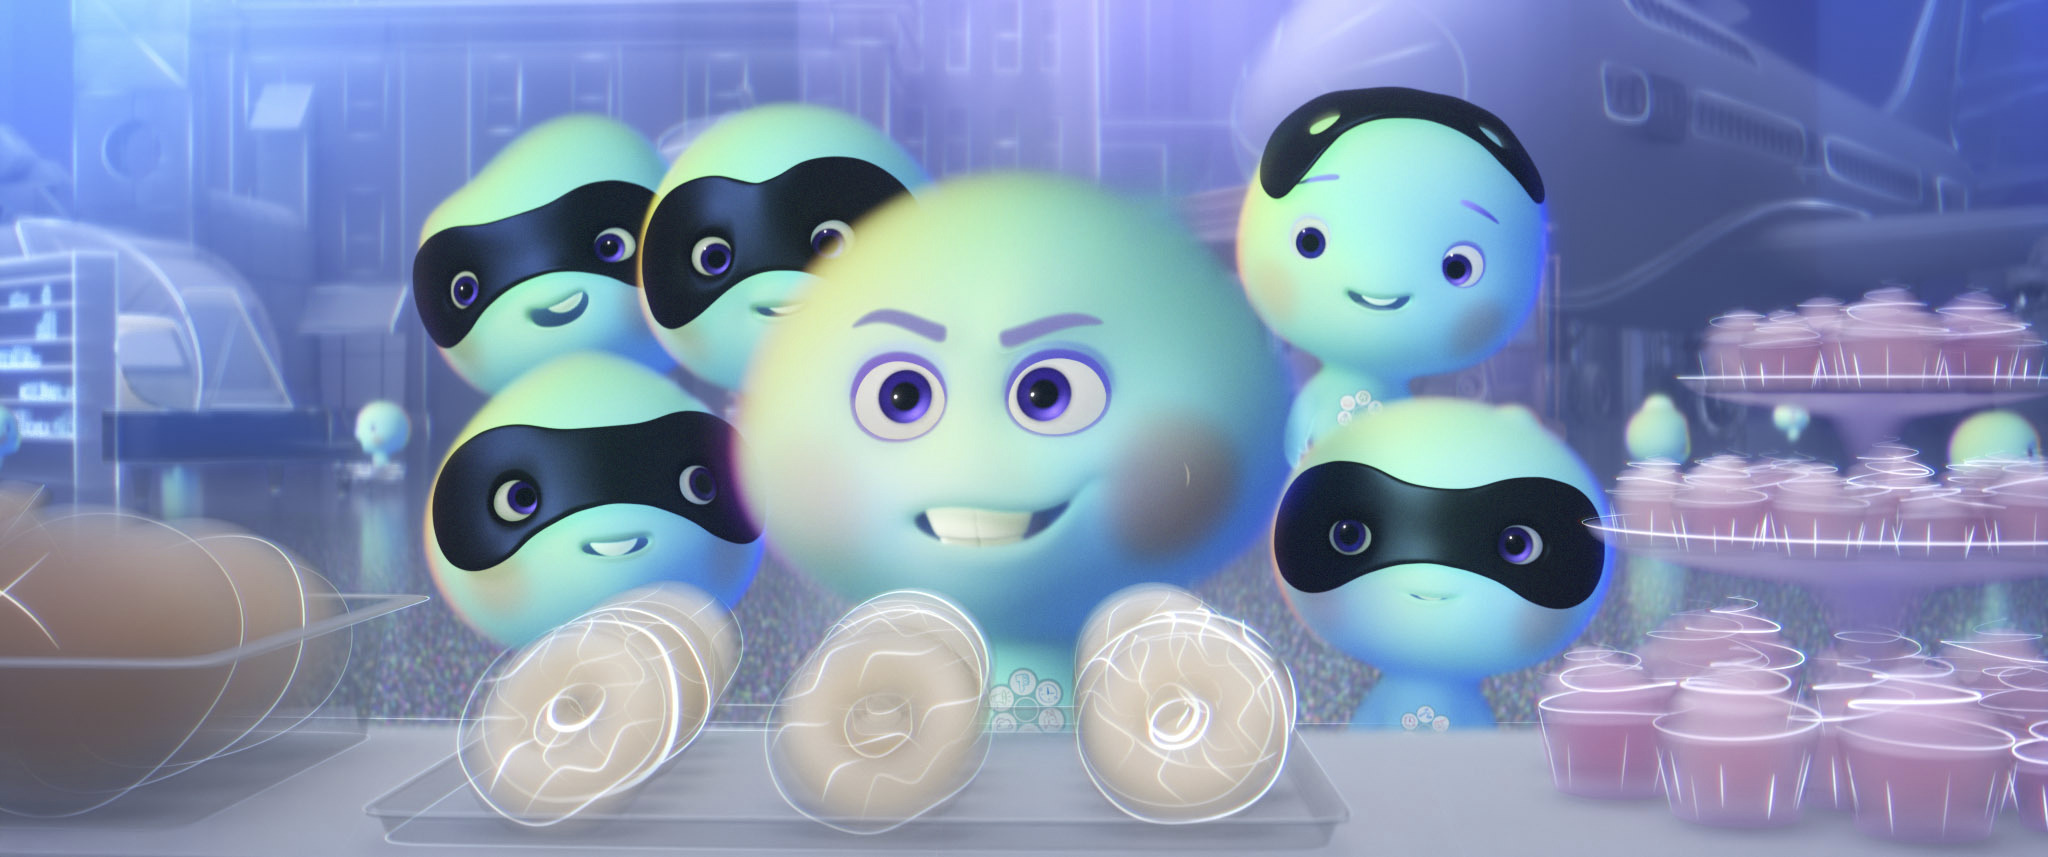 Pixar Soul Short “22 Vs Earth” Coming Soon To Disney+